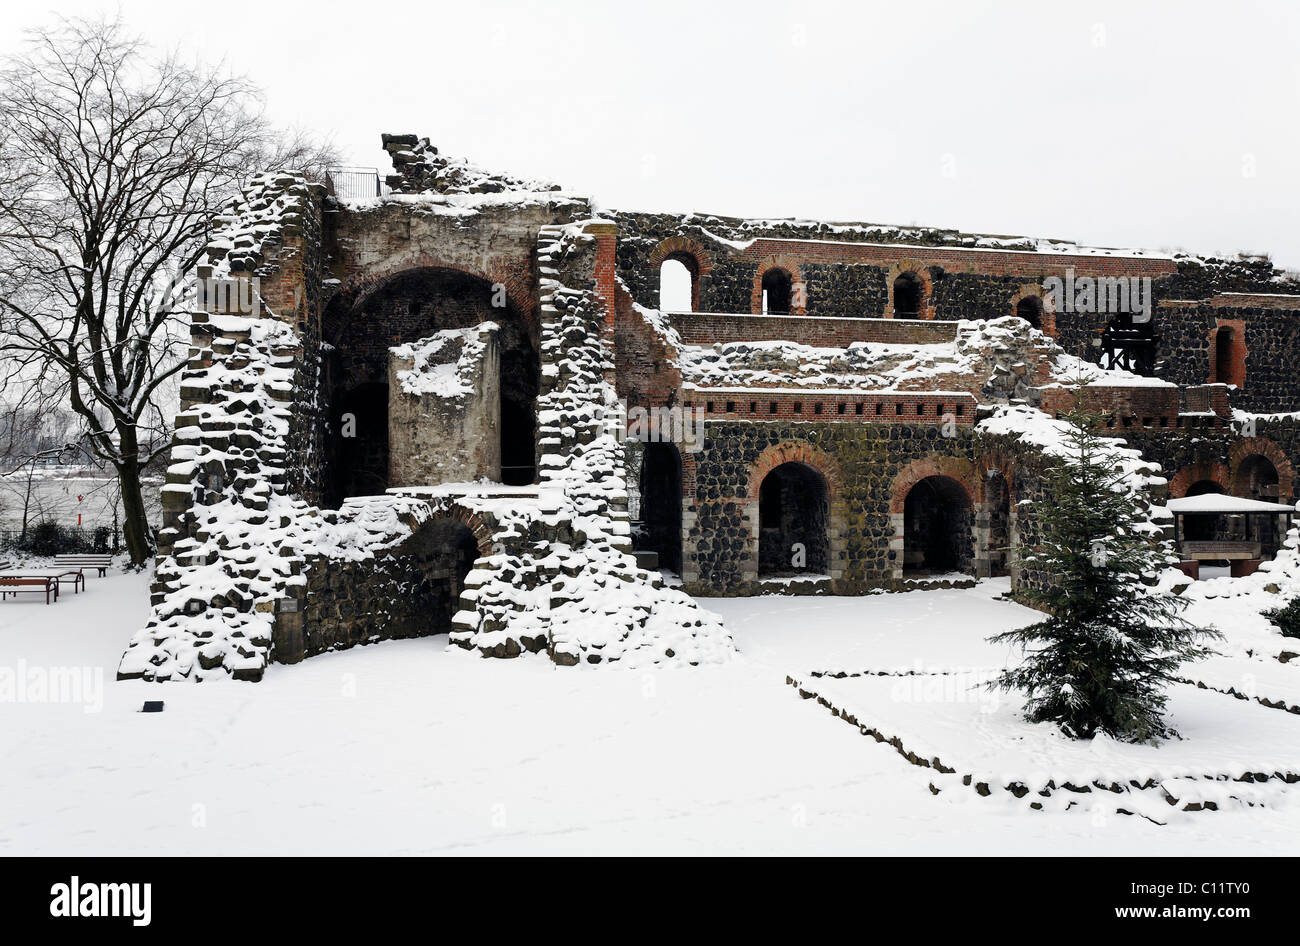 Ruines du palais impérial Kaiserpfalz dans la neige, Duesseldorf-Kaiserswerth, Nordrhein-Westfalen, Germany, Europe Banque D'Images